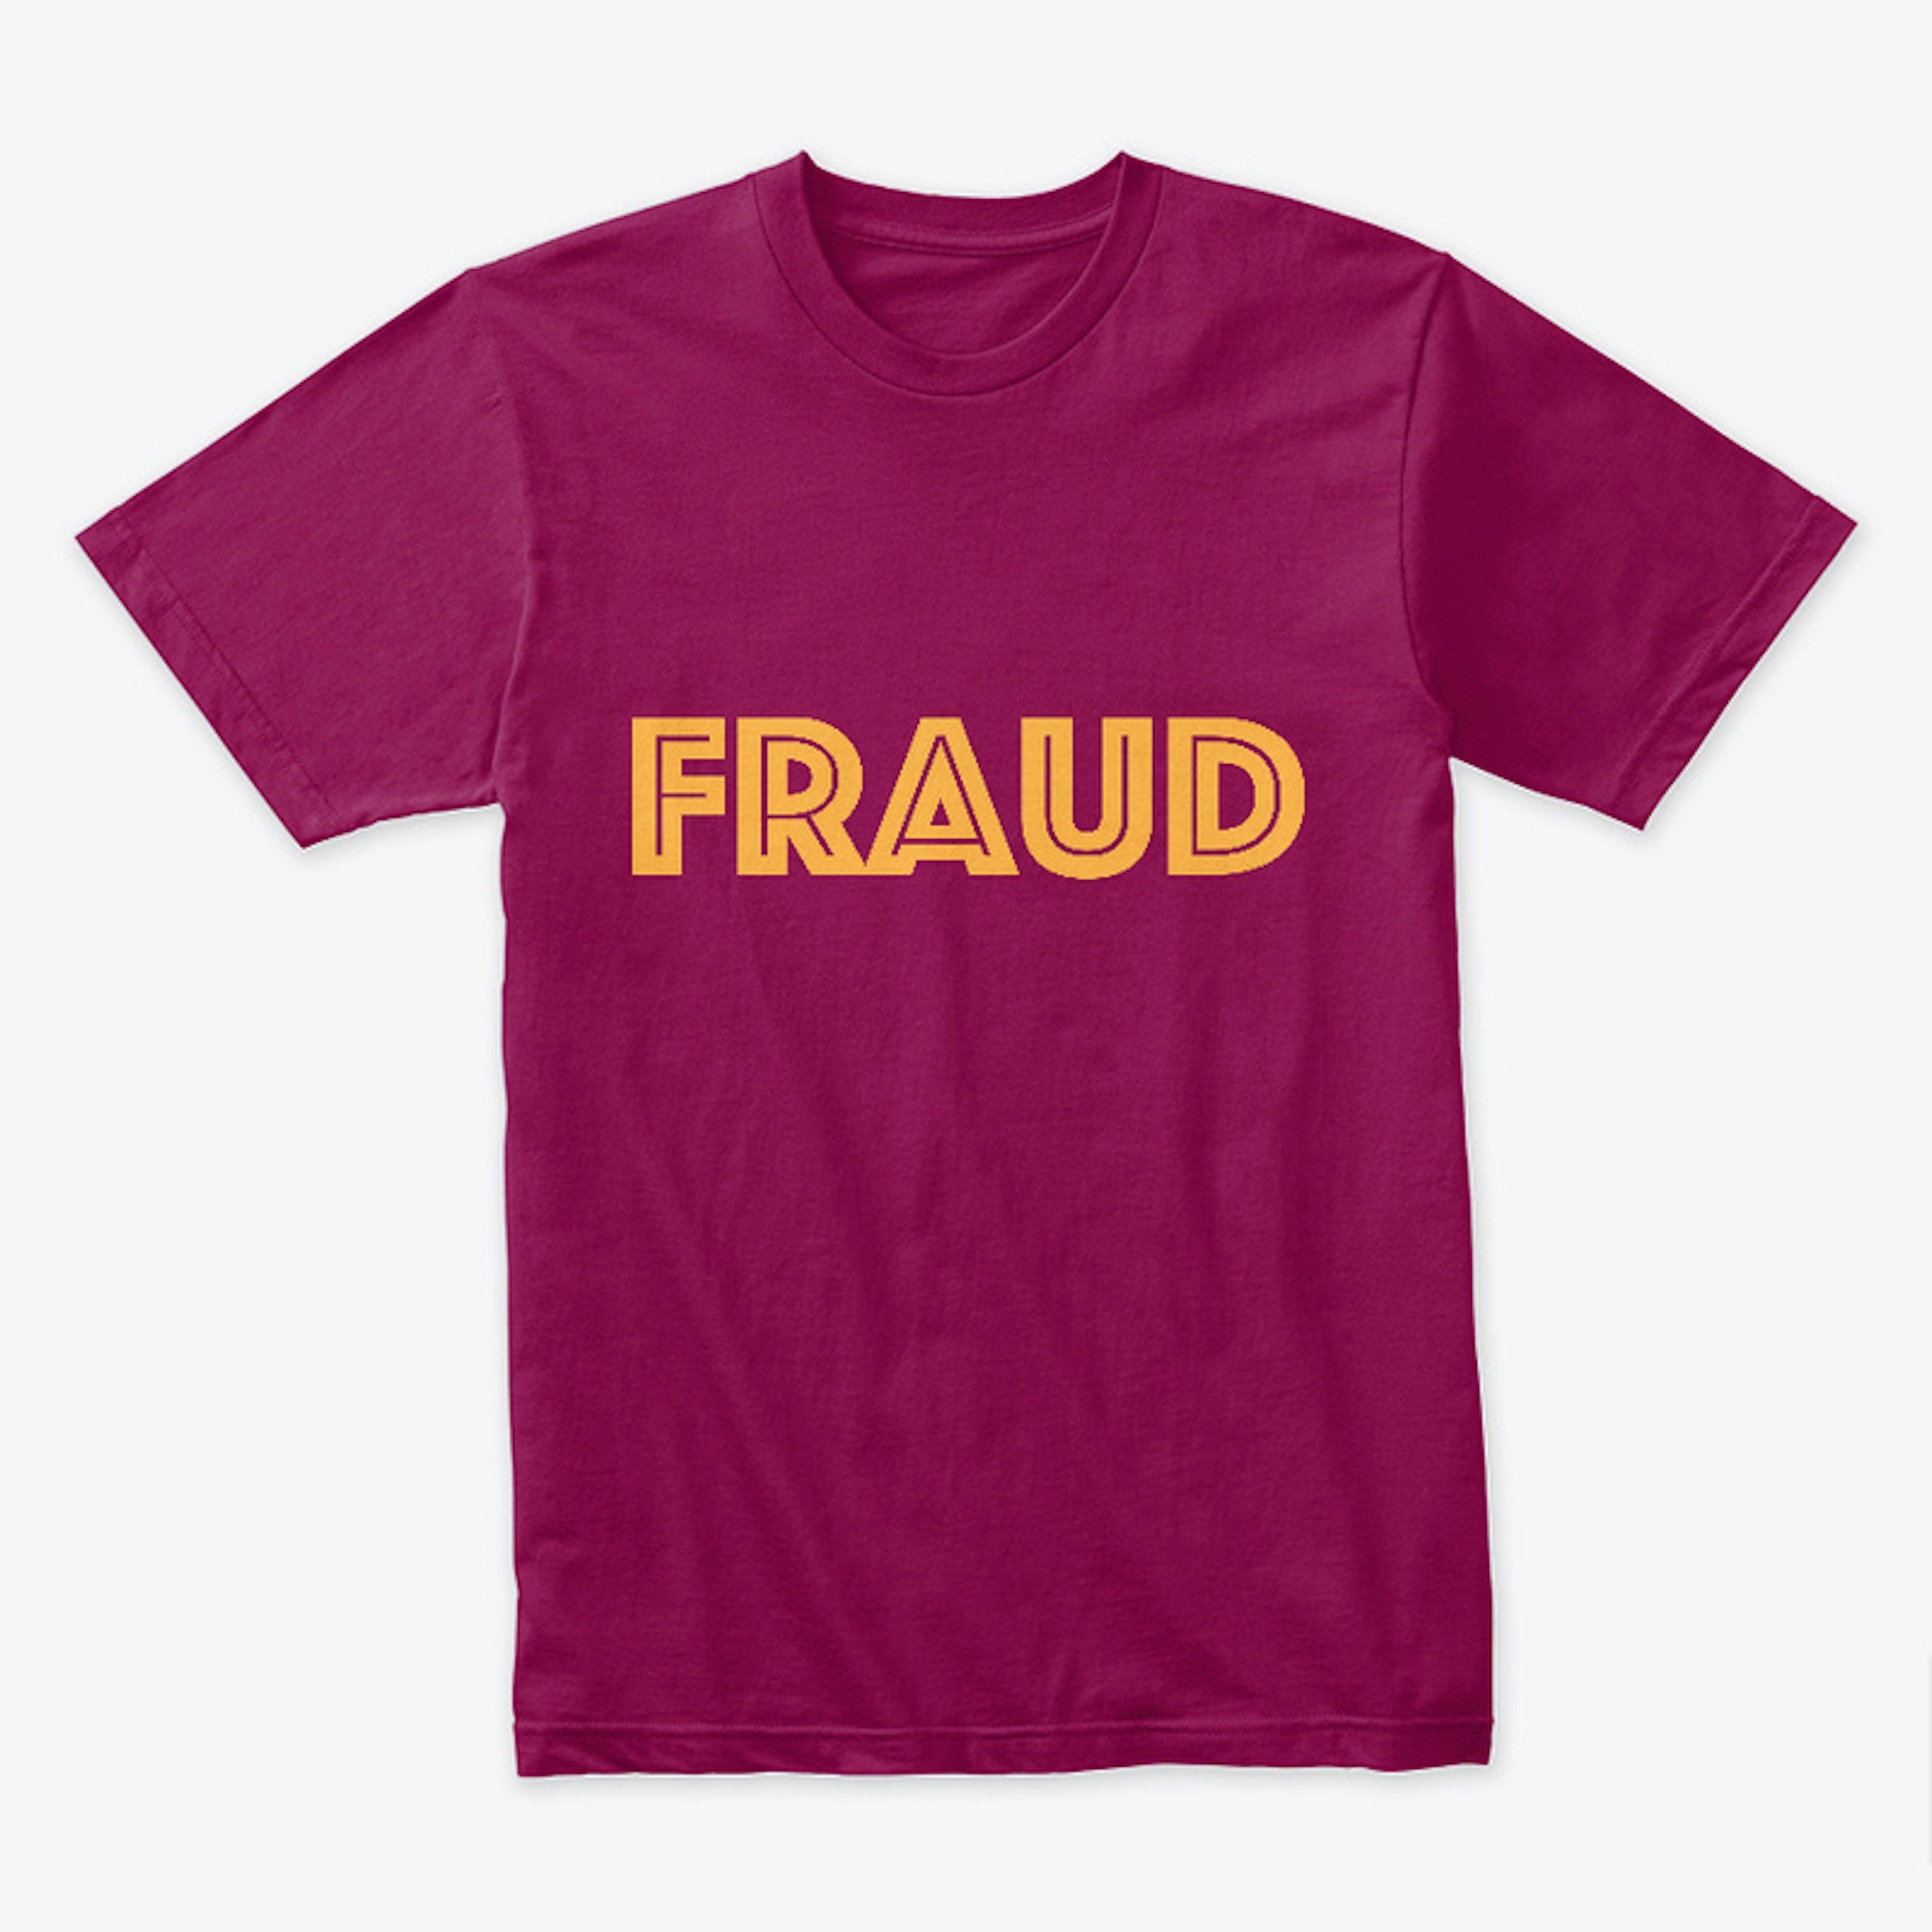 Fraud T-shirt